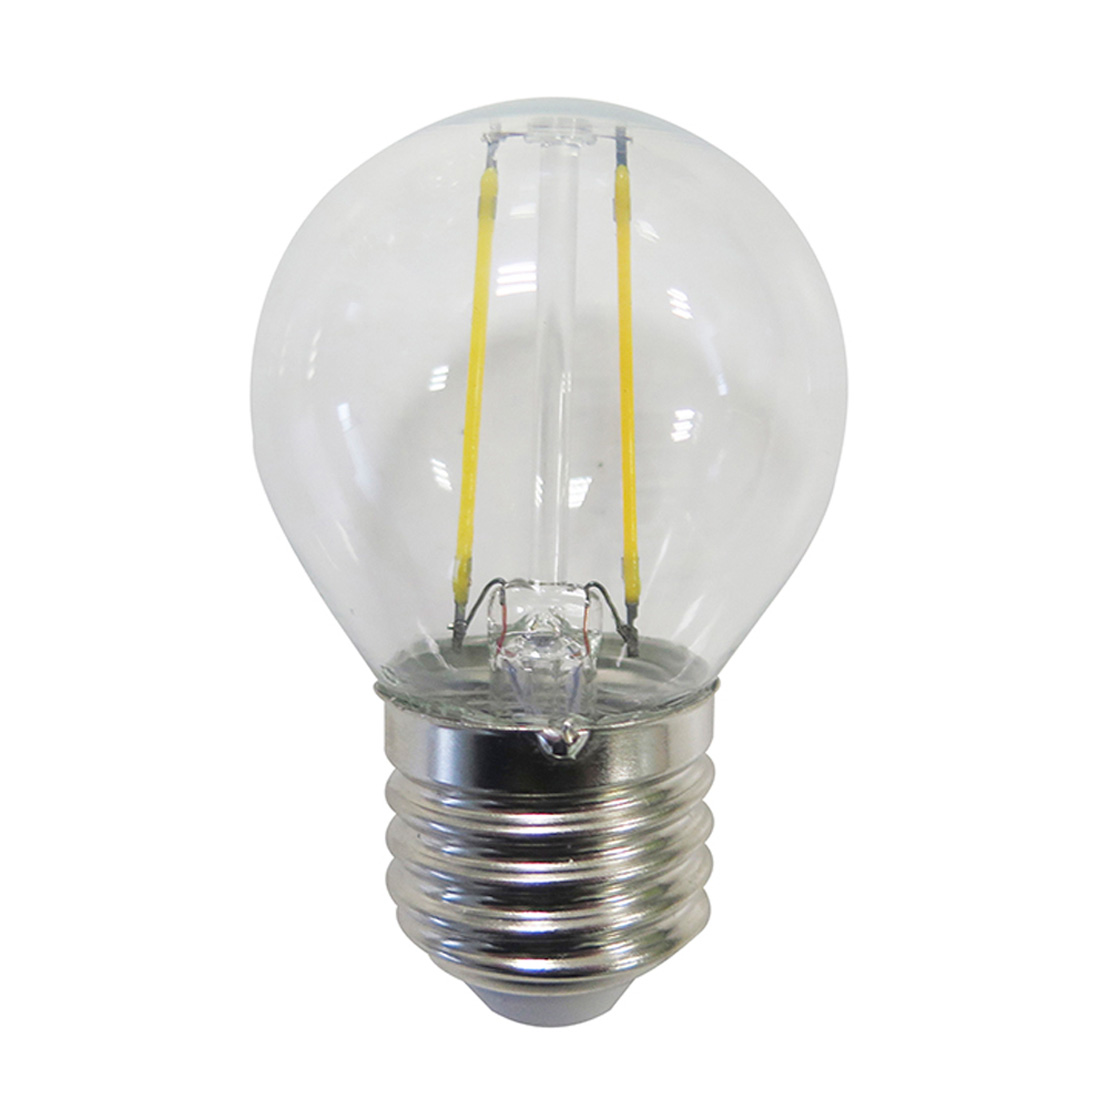 Polux LED filamentti - Kork: 7,4cm - 2W - Läpinäkyvä 